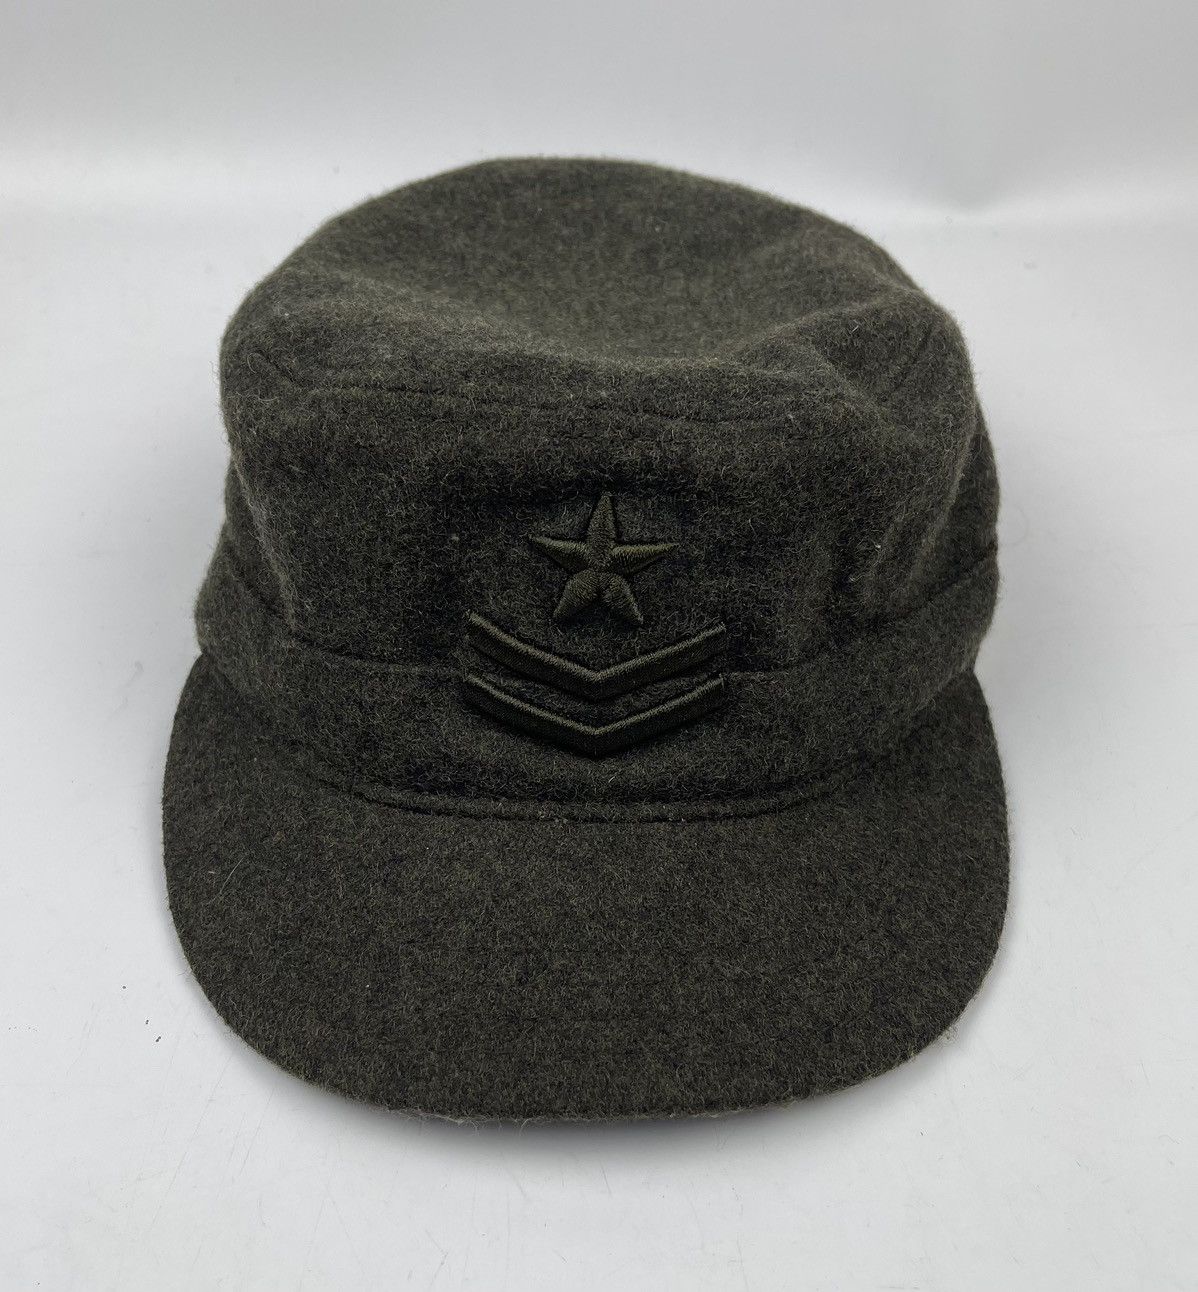 diesel hat cap military style tc7 - 2